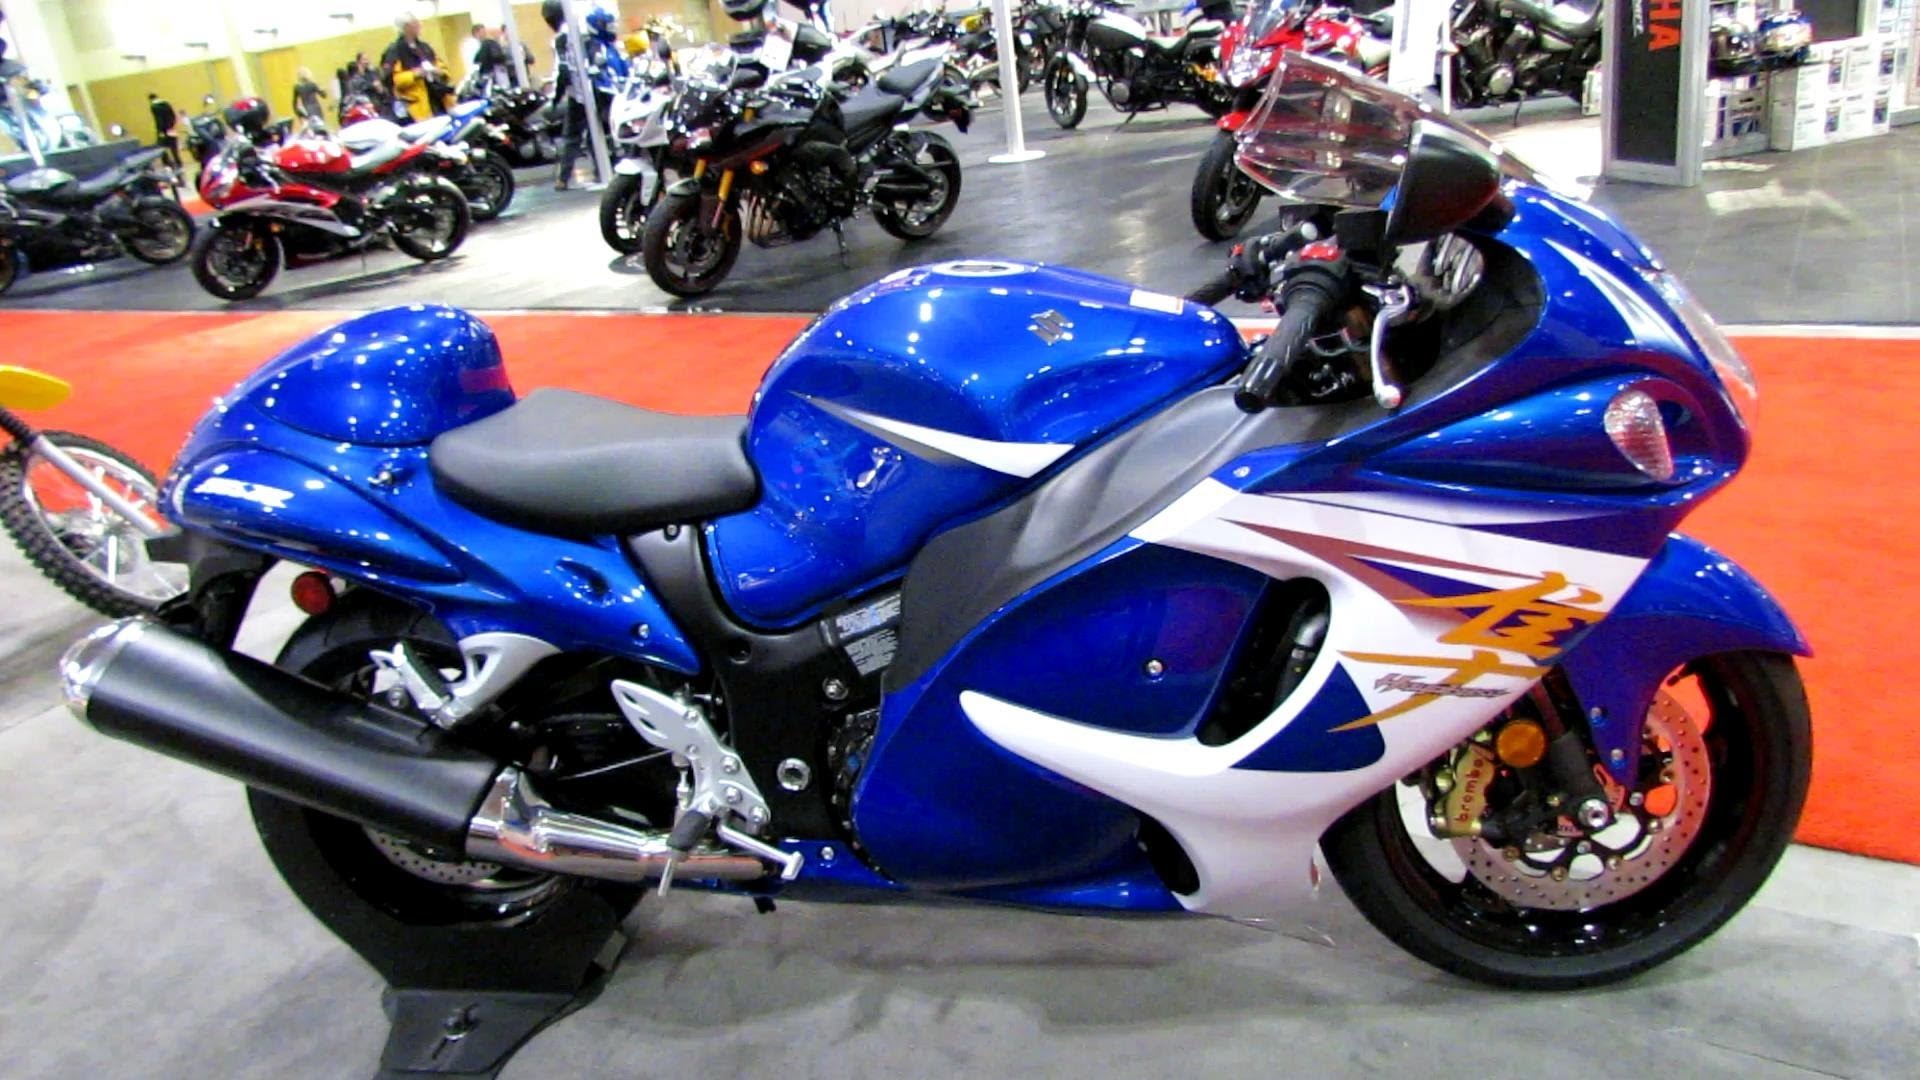 Suzuki Hayabusa Wallpaper HD Motorcycle Pictures Info And